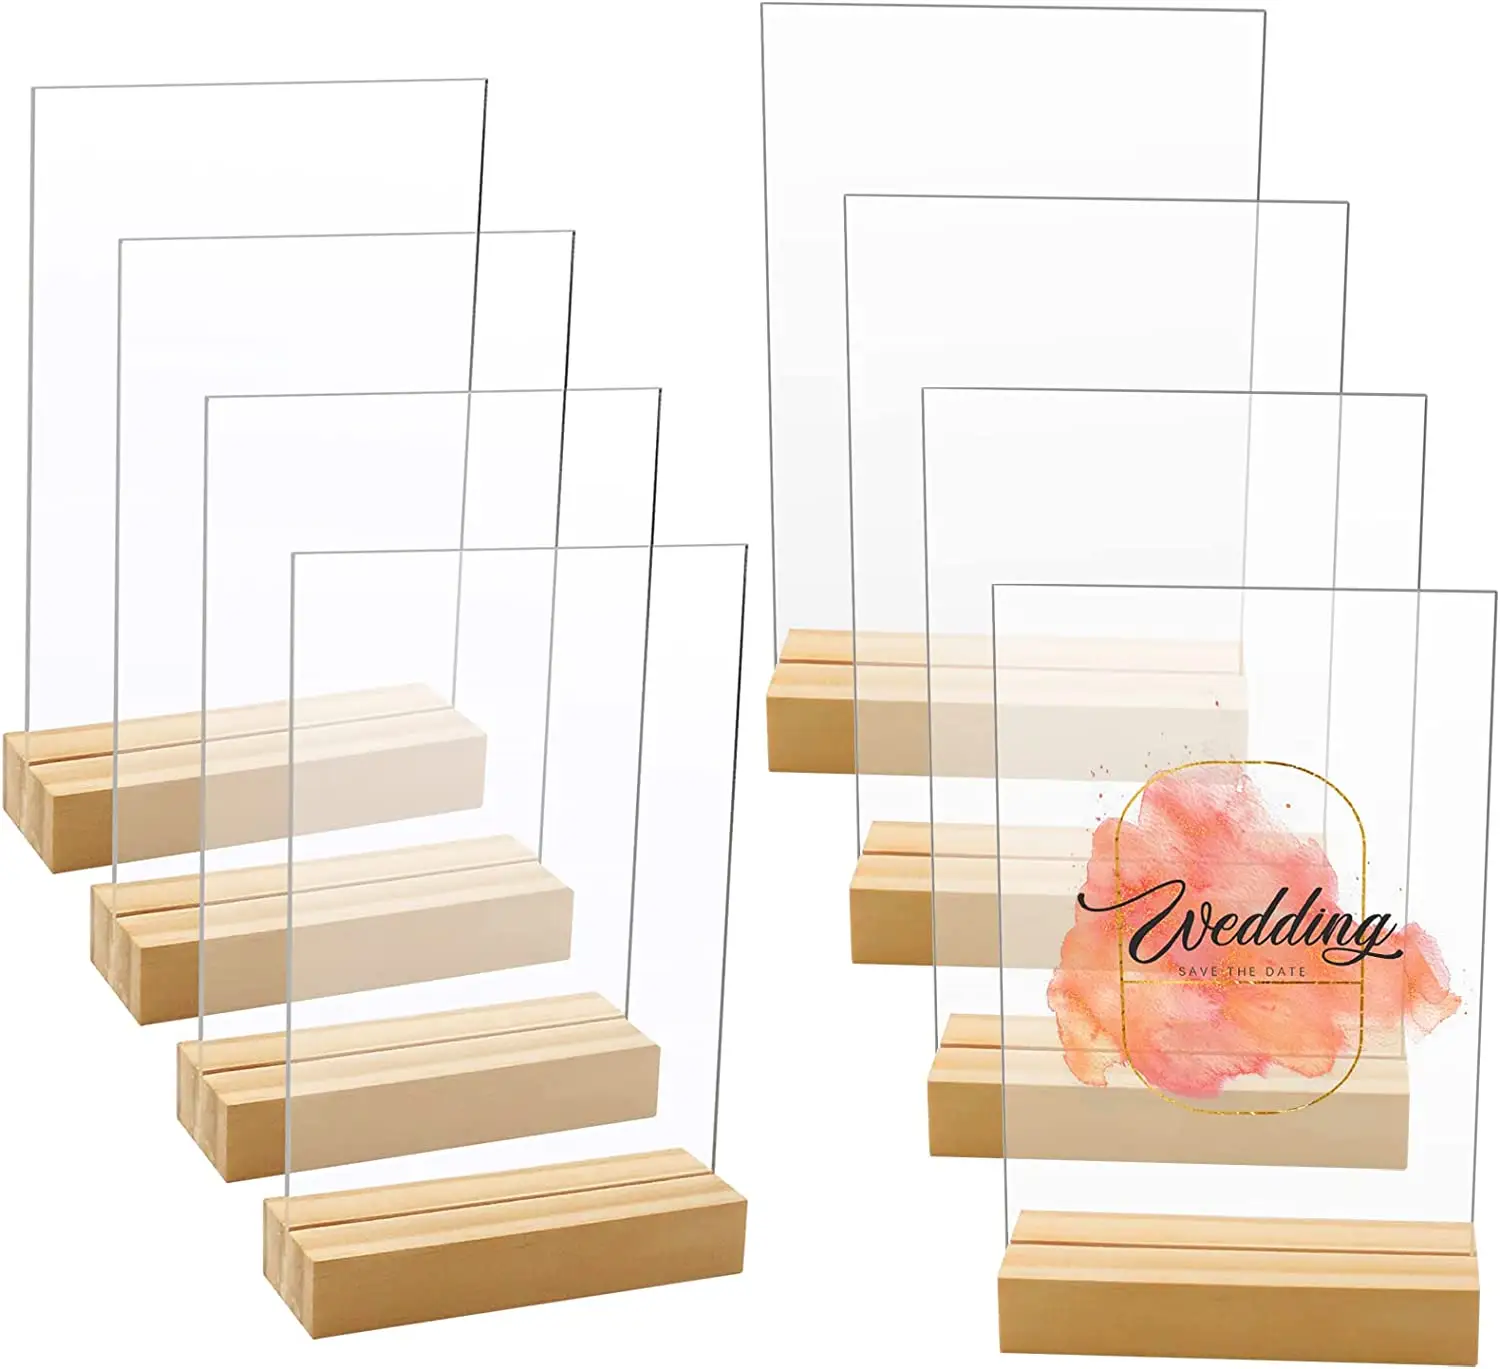 XITU CustomTable Wedding Wood Base Acrylic Sign Holder For Sheet Sign Holders Menu Card Display